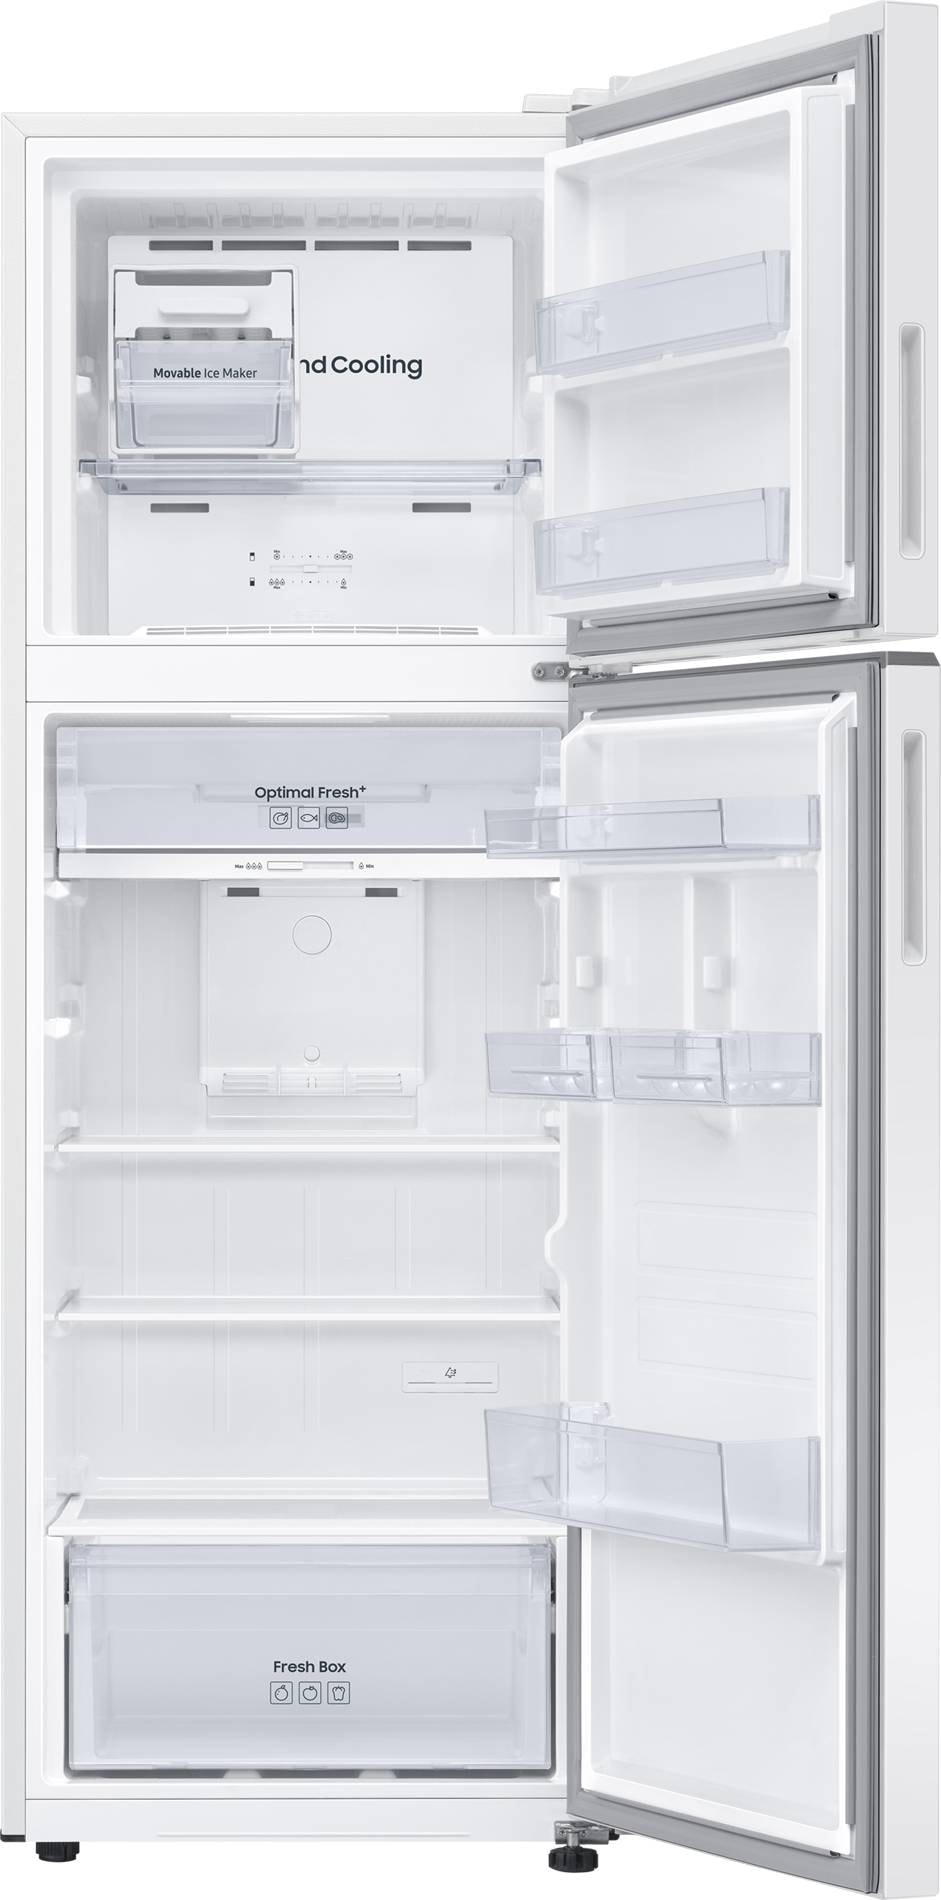 SAMSUNG Réfrigérateur congélateur haut  - RT31CG5624WW